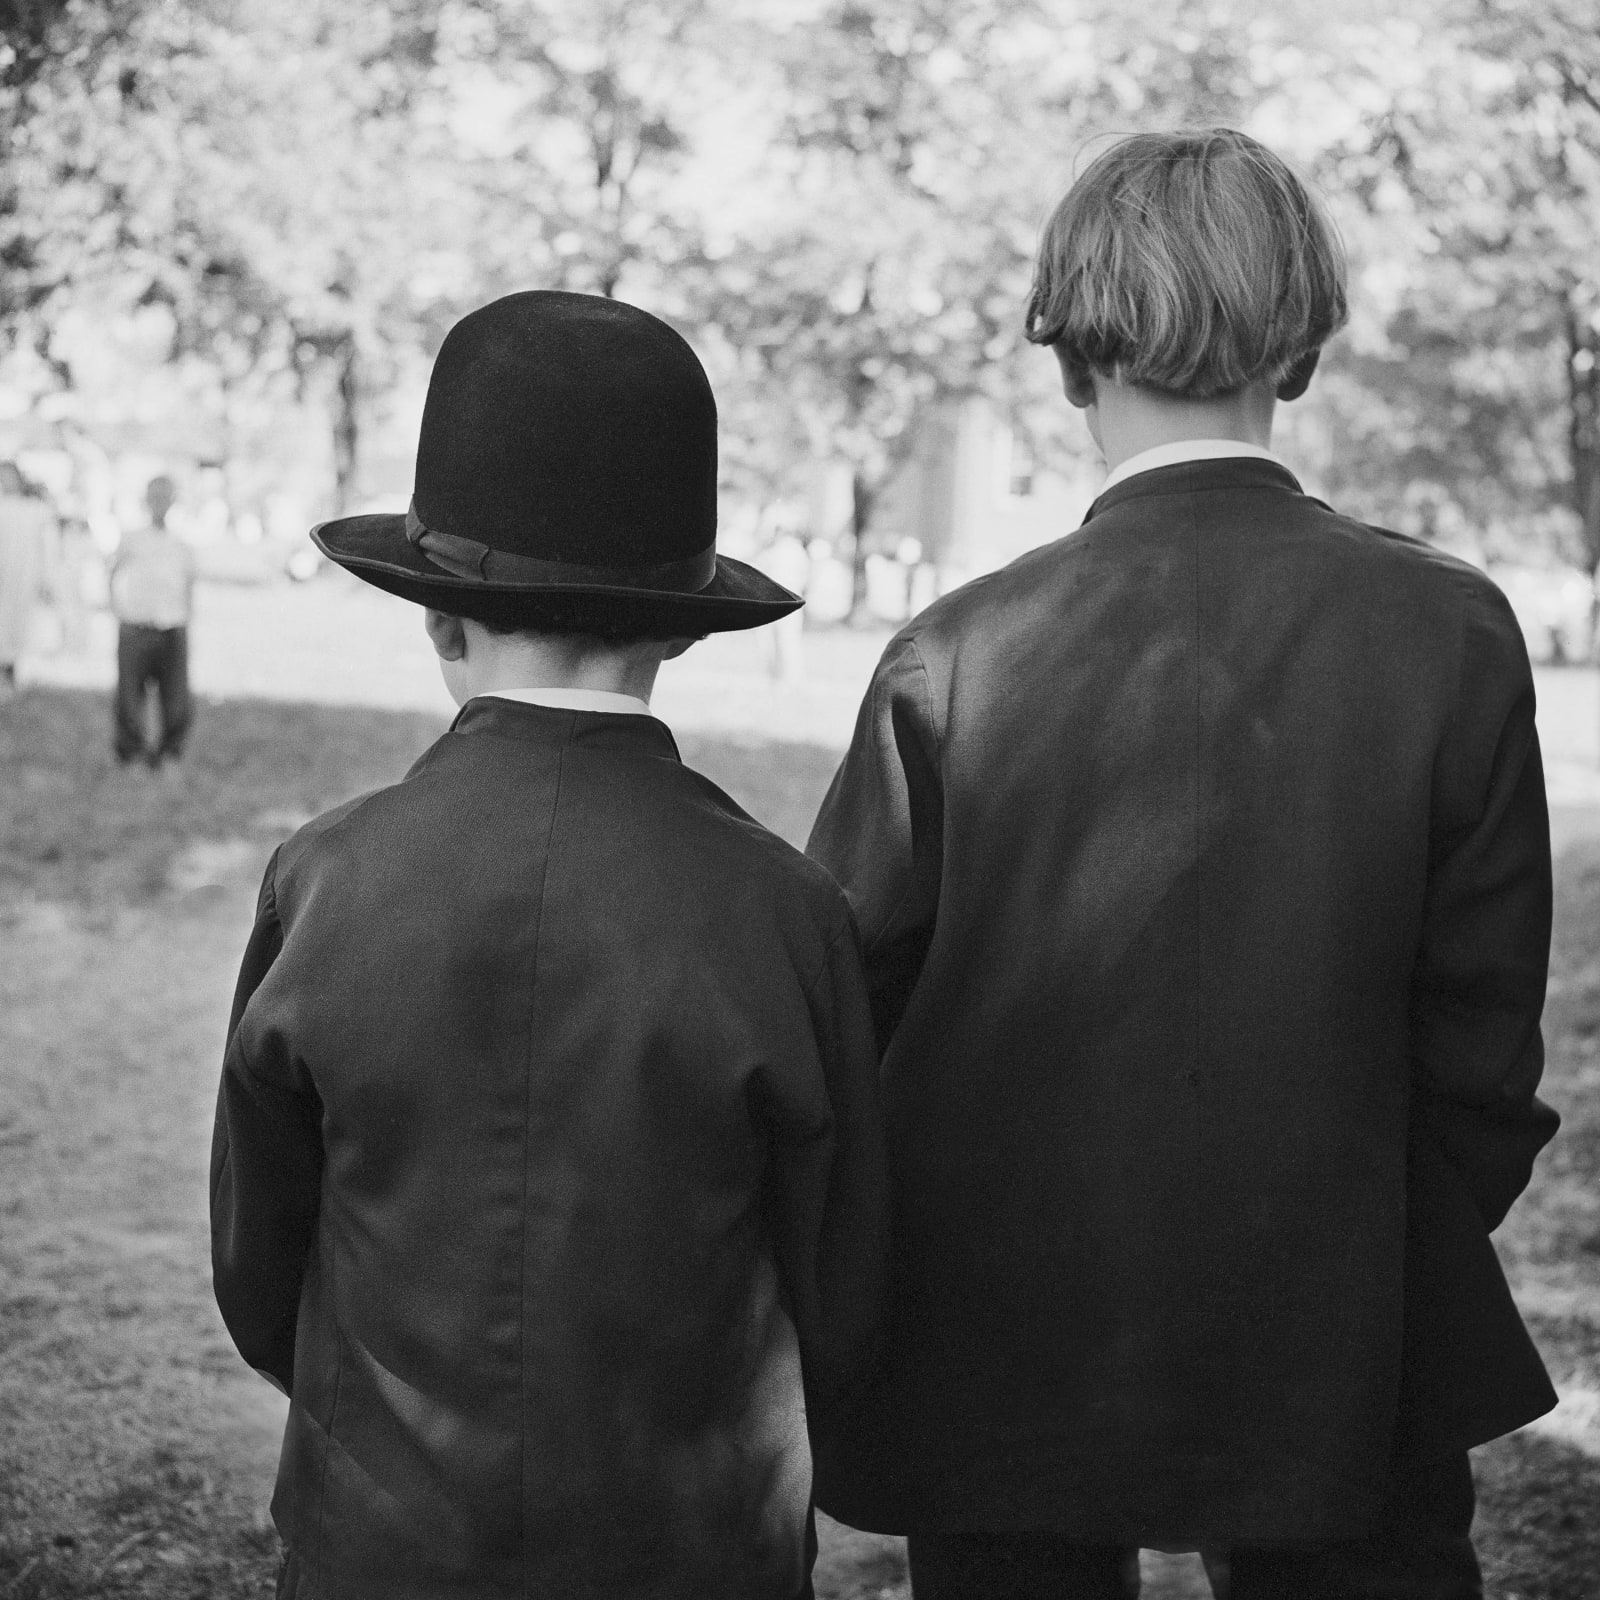 DAVID L. HUNSBERGER, Amish Boys, 1958